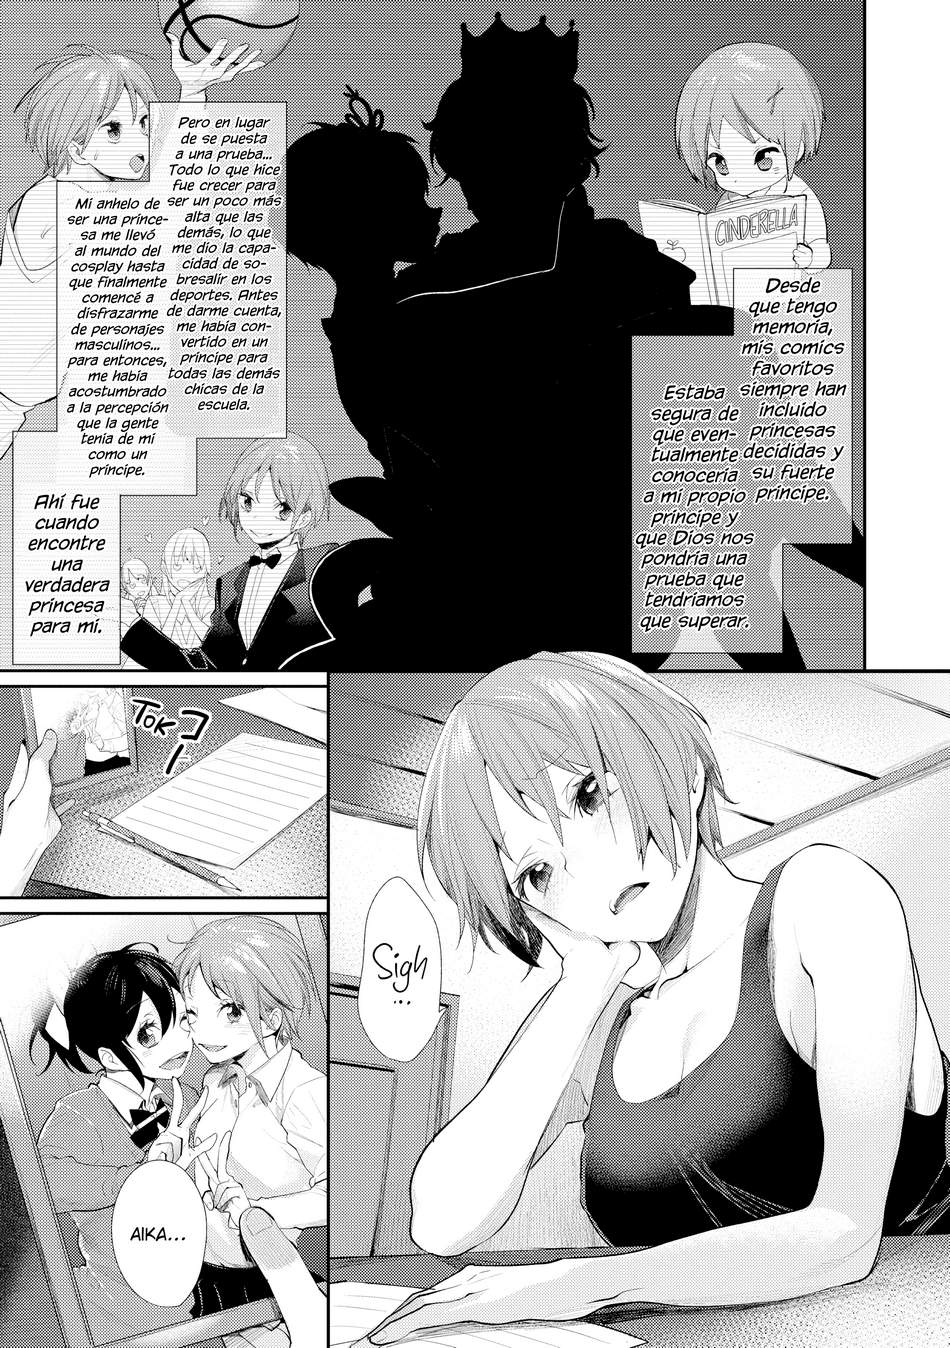 Prince of the Female Otaku Club #5 - Page #1